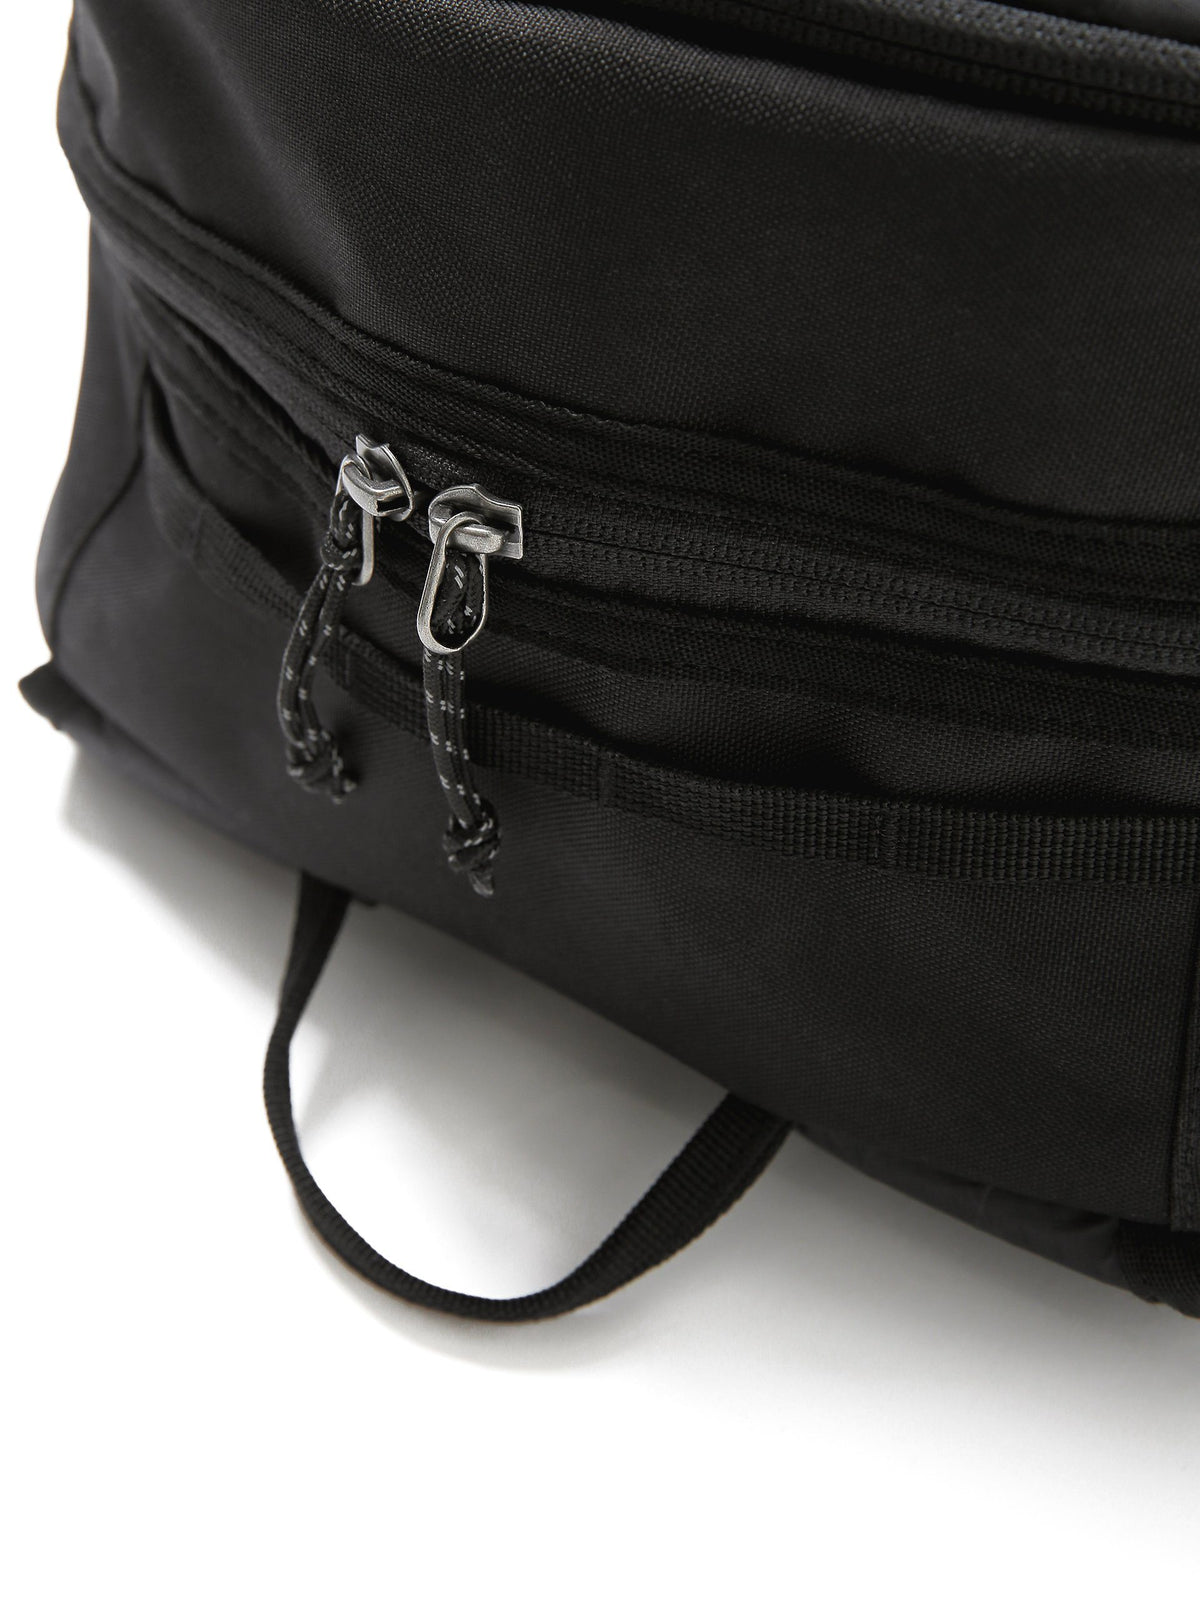 SFX 30 Backpack Bag